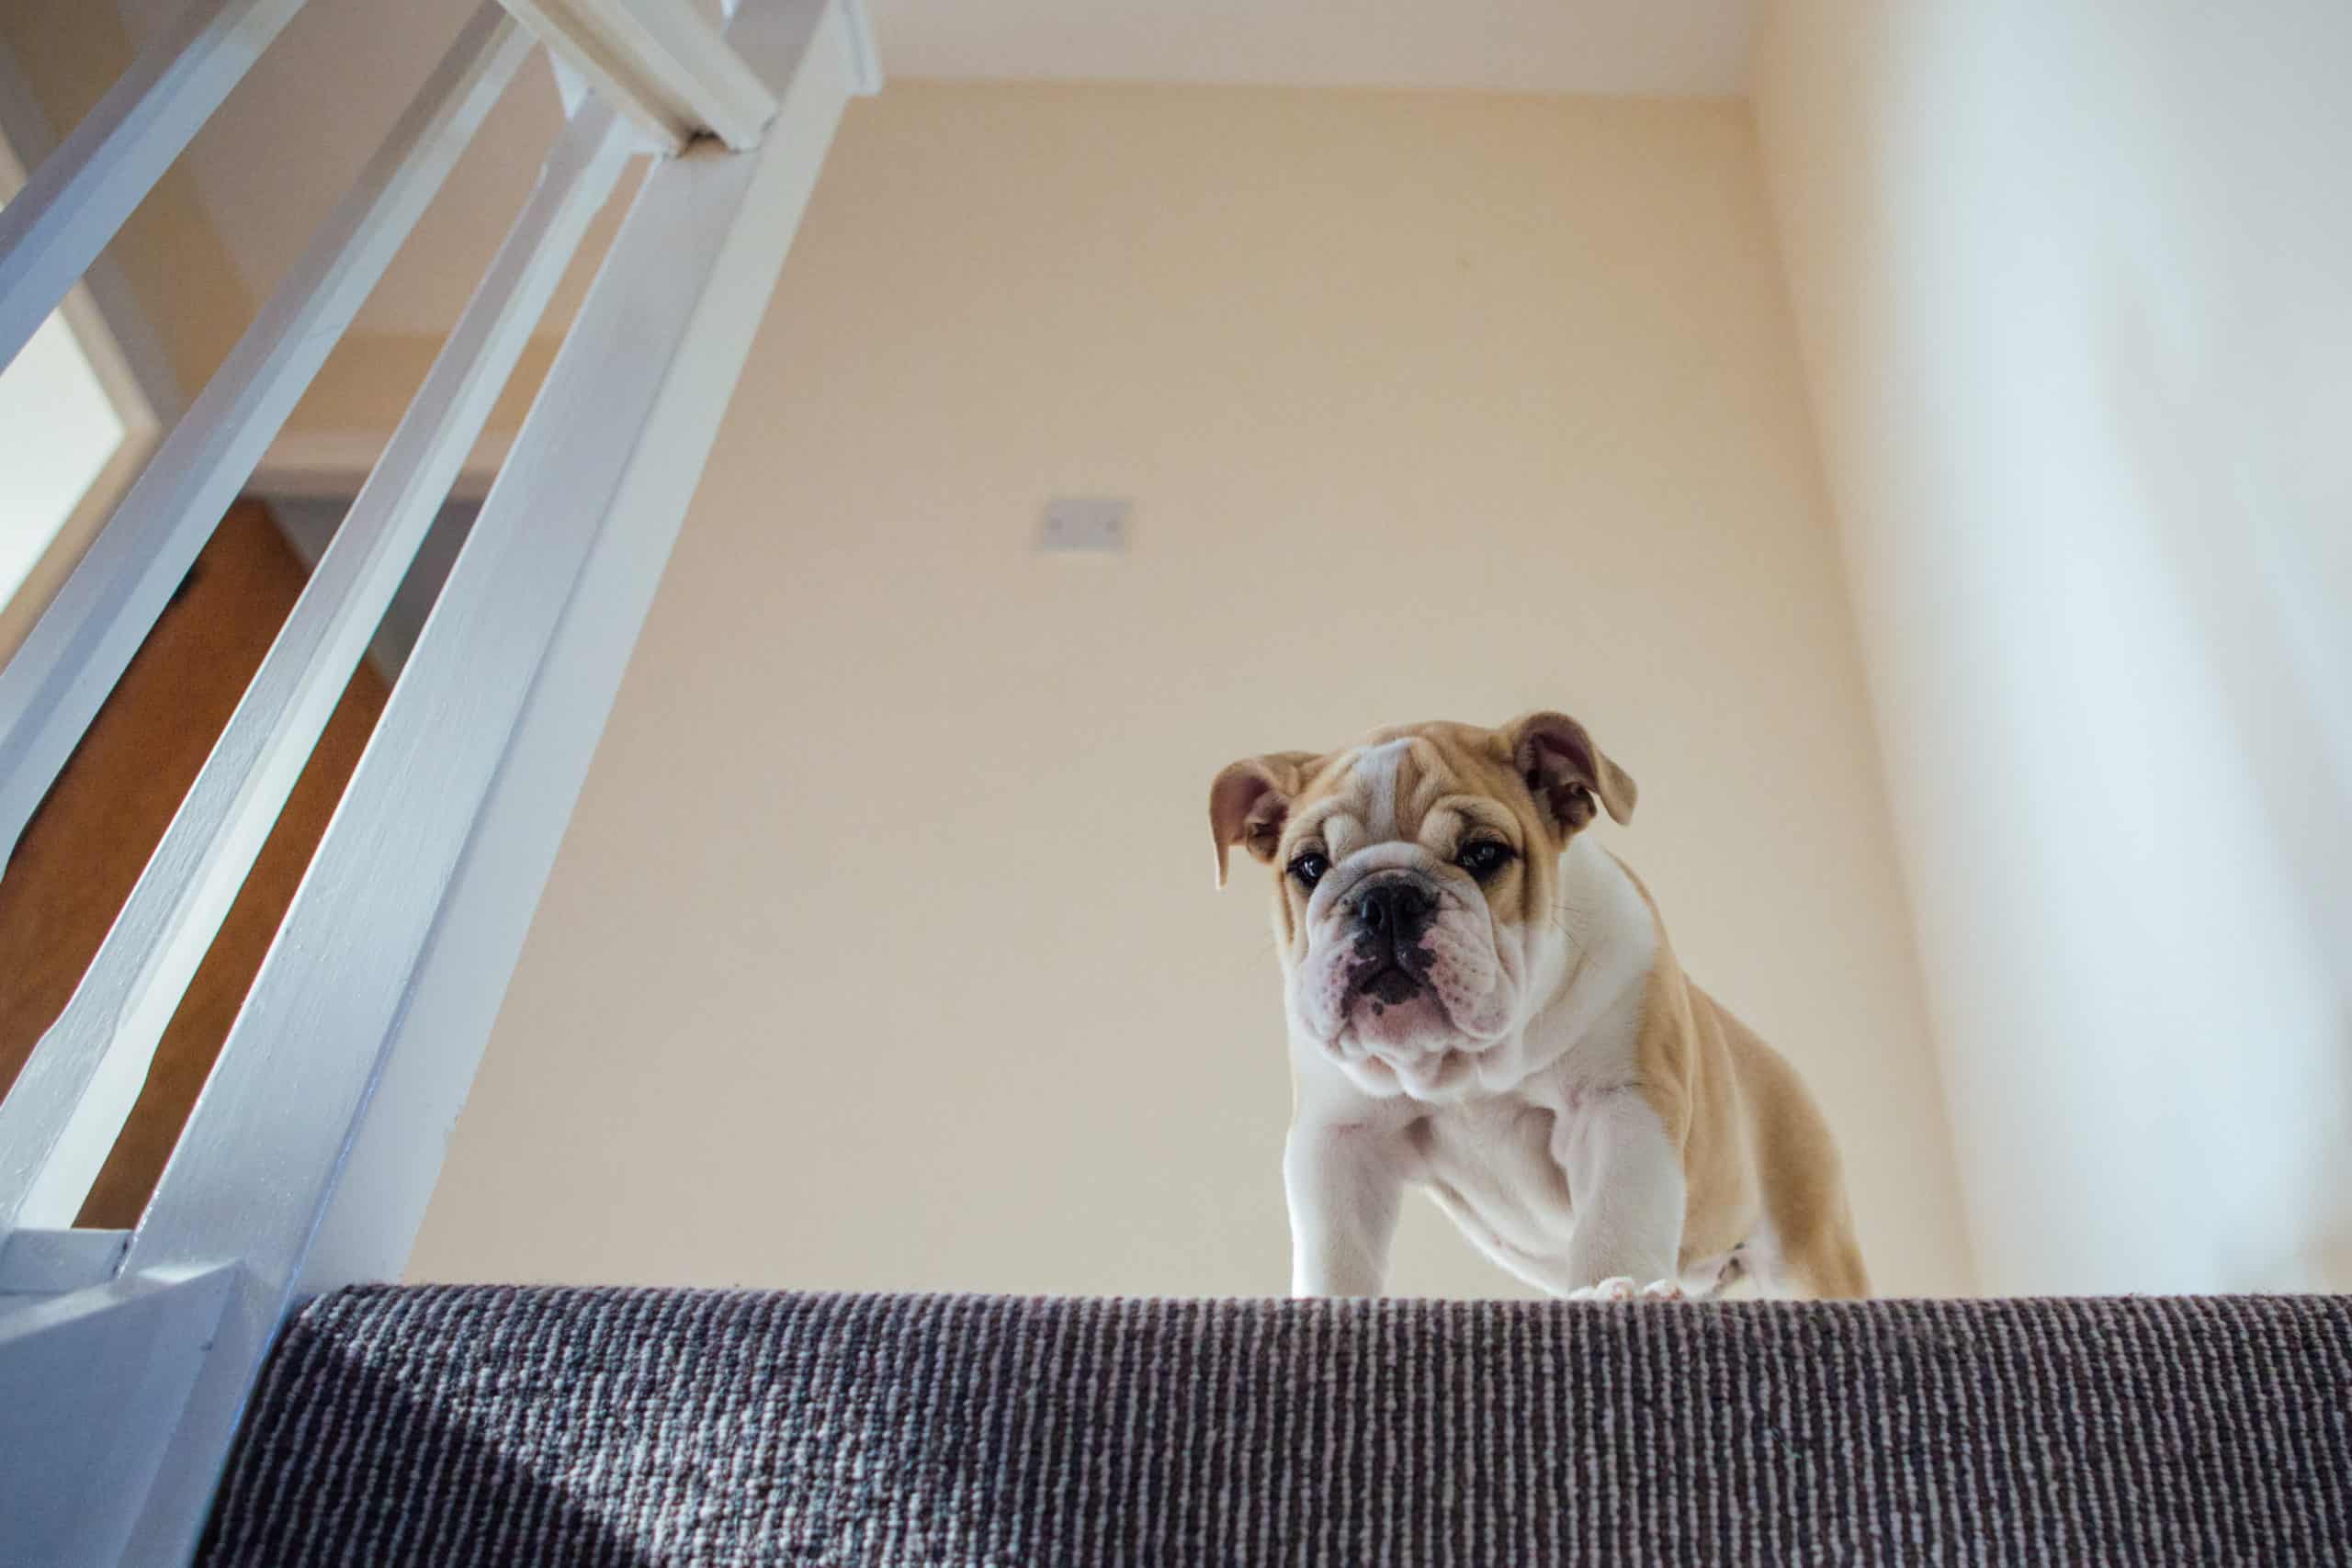 Why won’t my dog go upstairs?